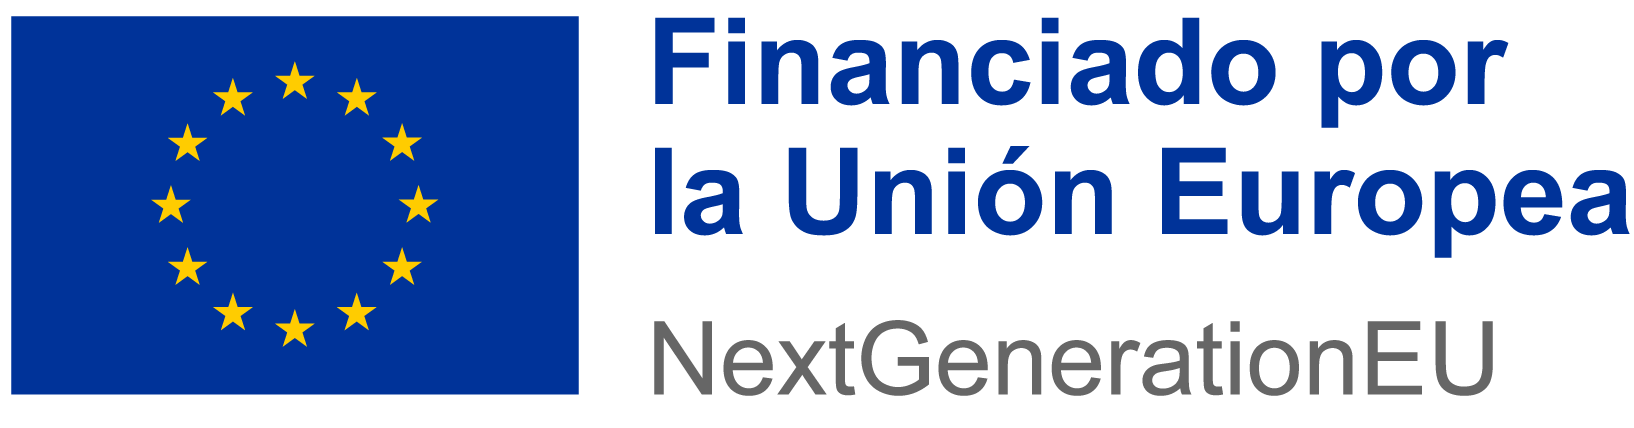 Logotipo NextGeneration EU